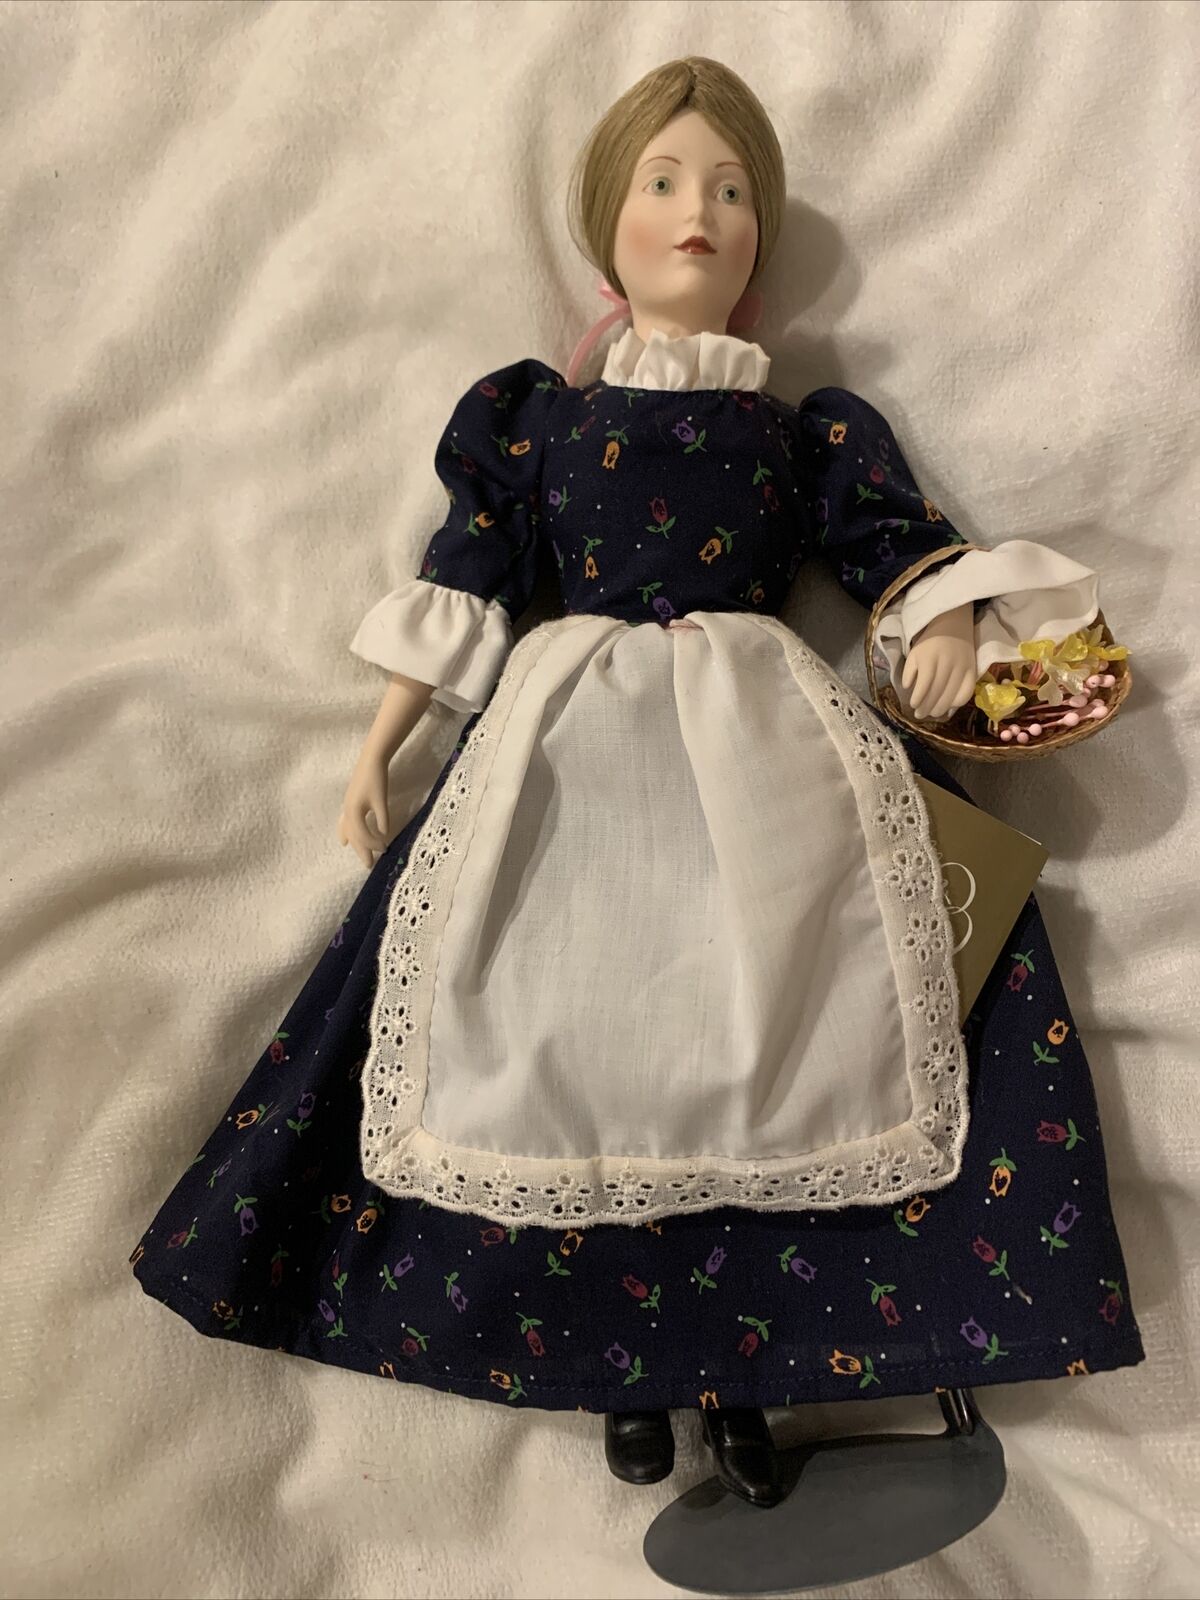 Franklin Heirloom Dolls Bisque North Carolina 14”Collectible by State Prilgram